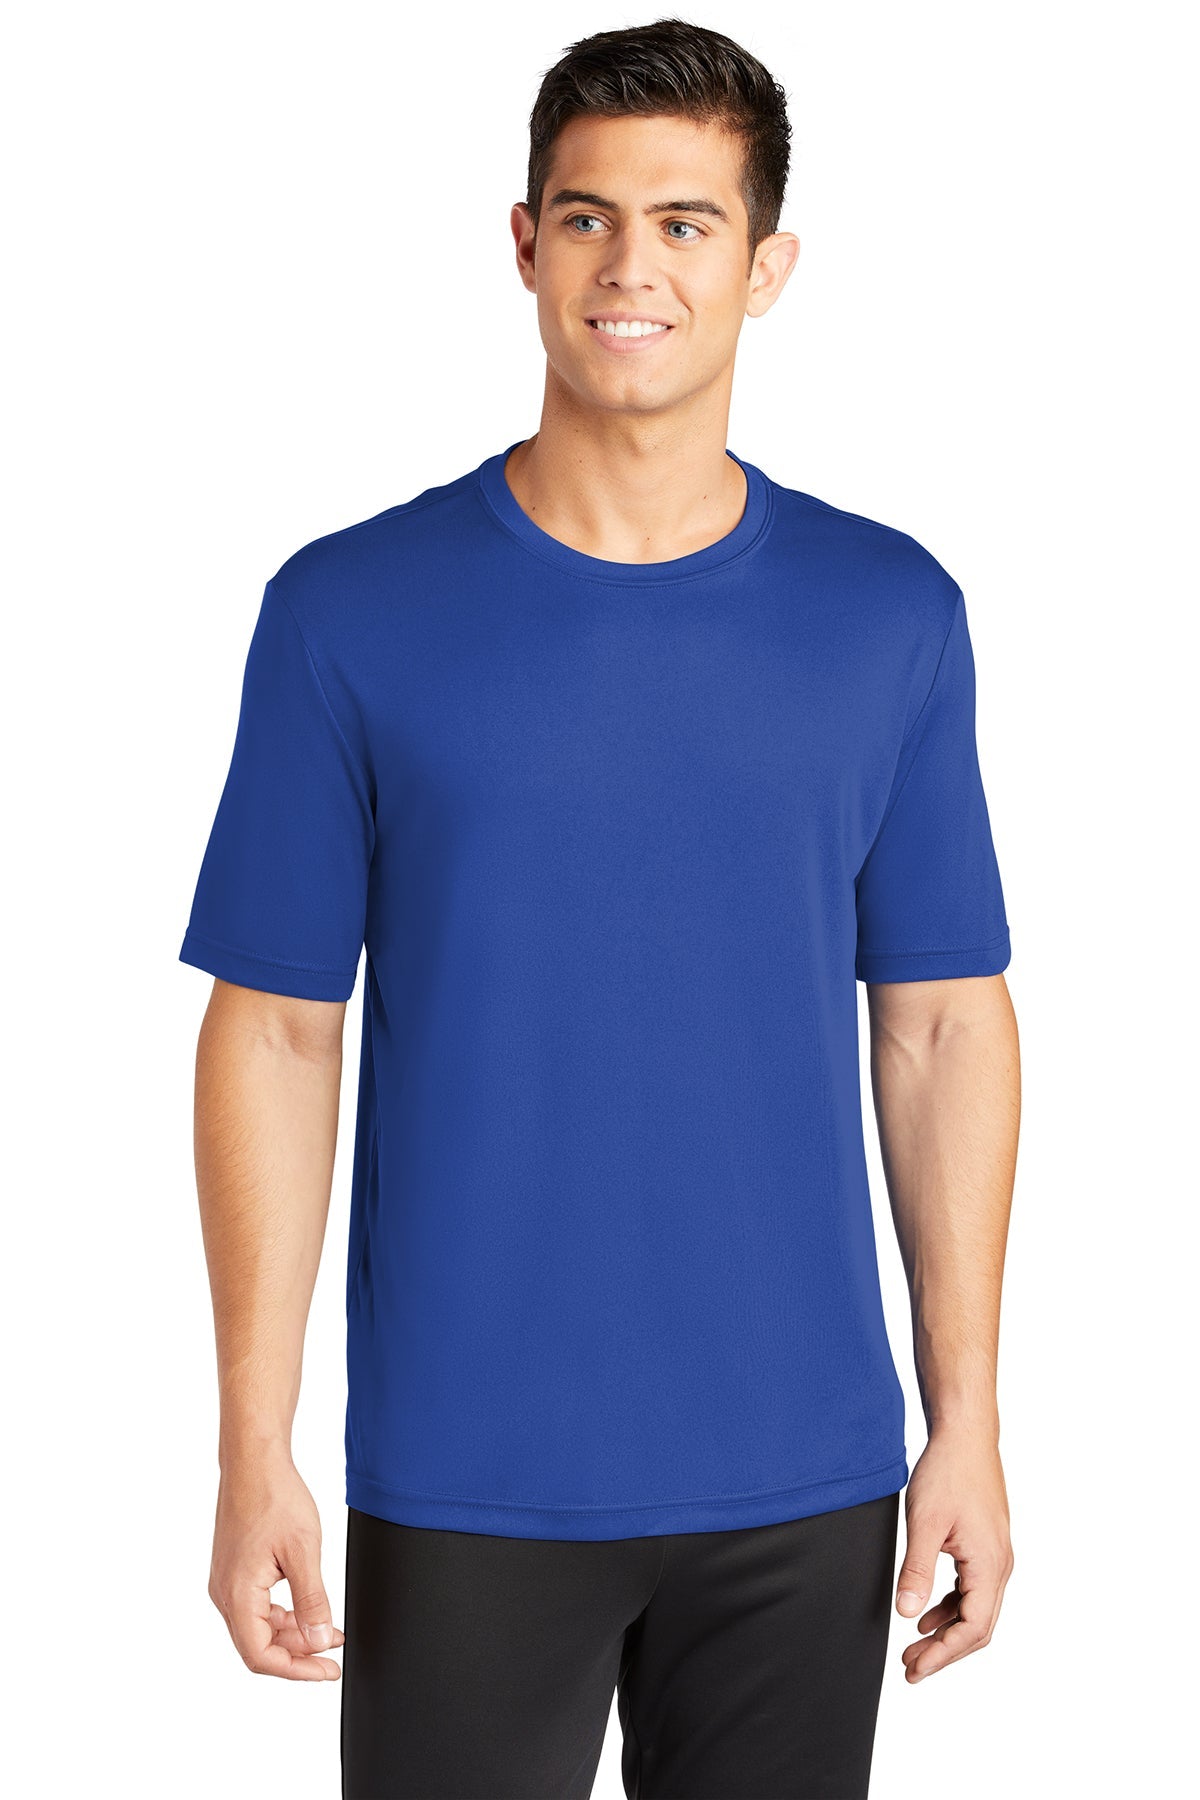 Polyester T-shirts - BT Imprintables Shirts